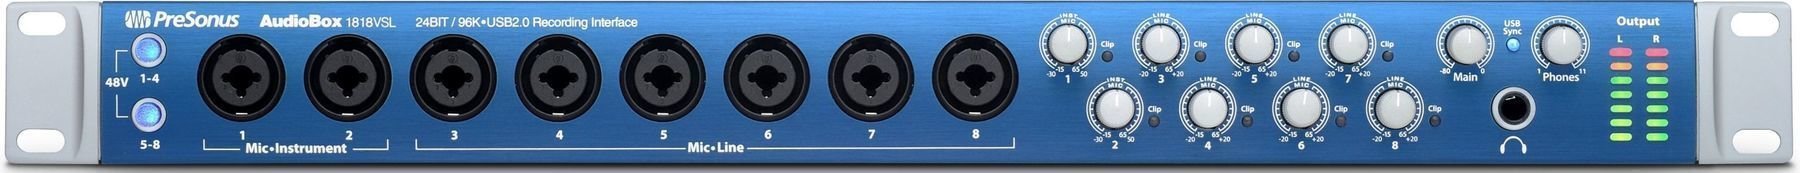 USB Audio Interface Presonus AudioBox 1818 VSL